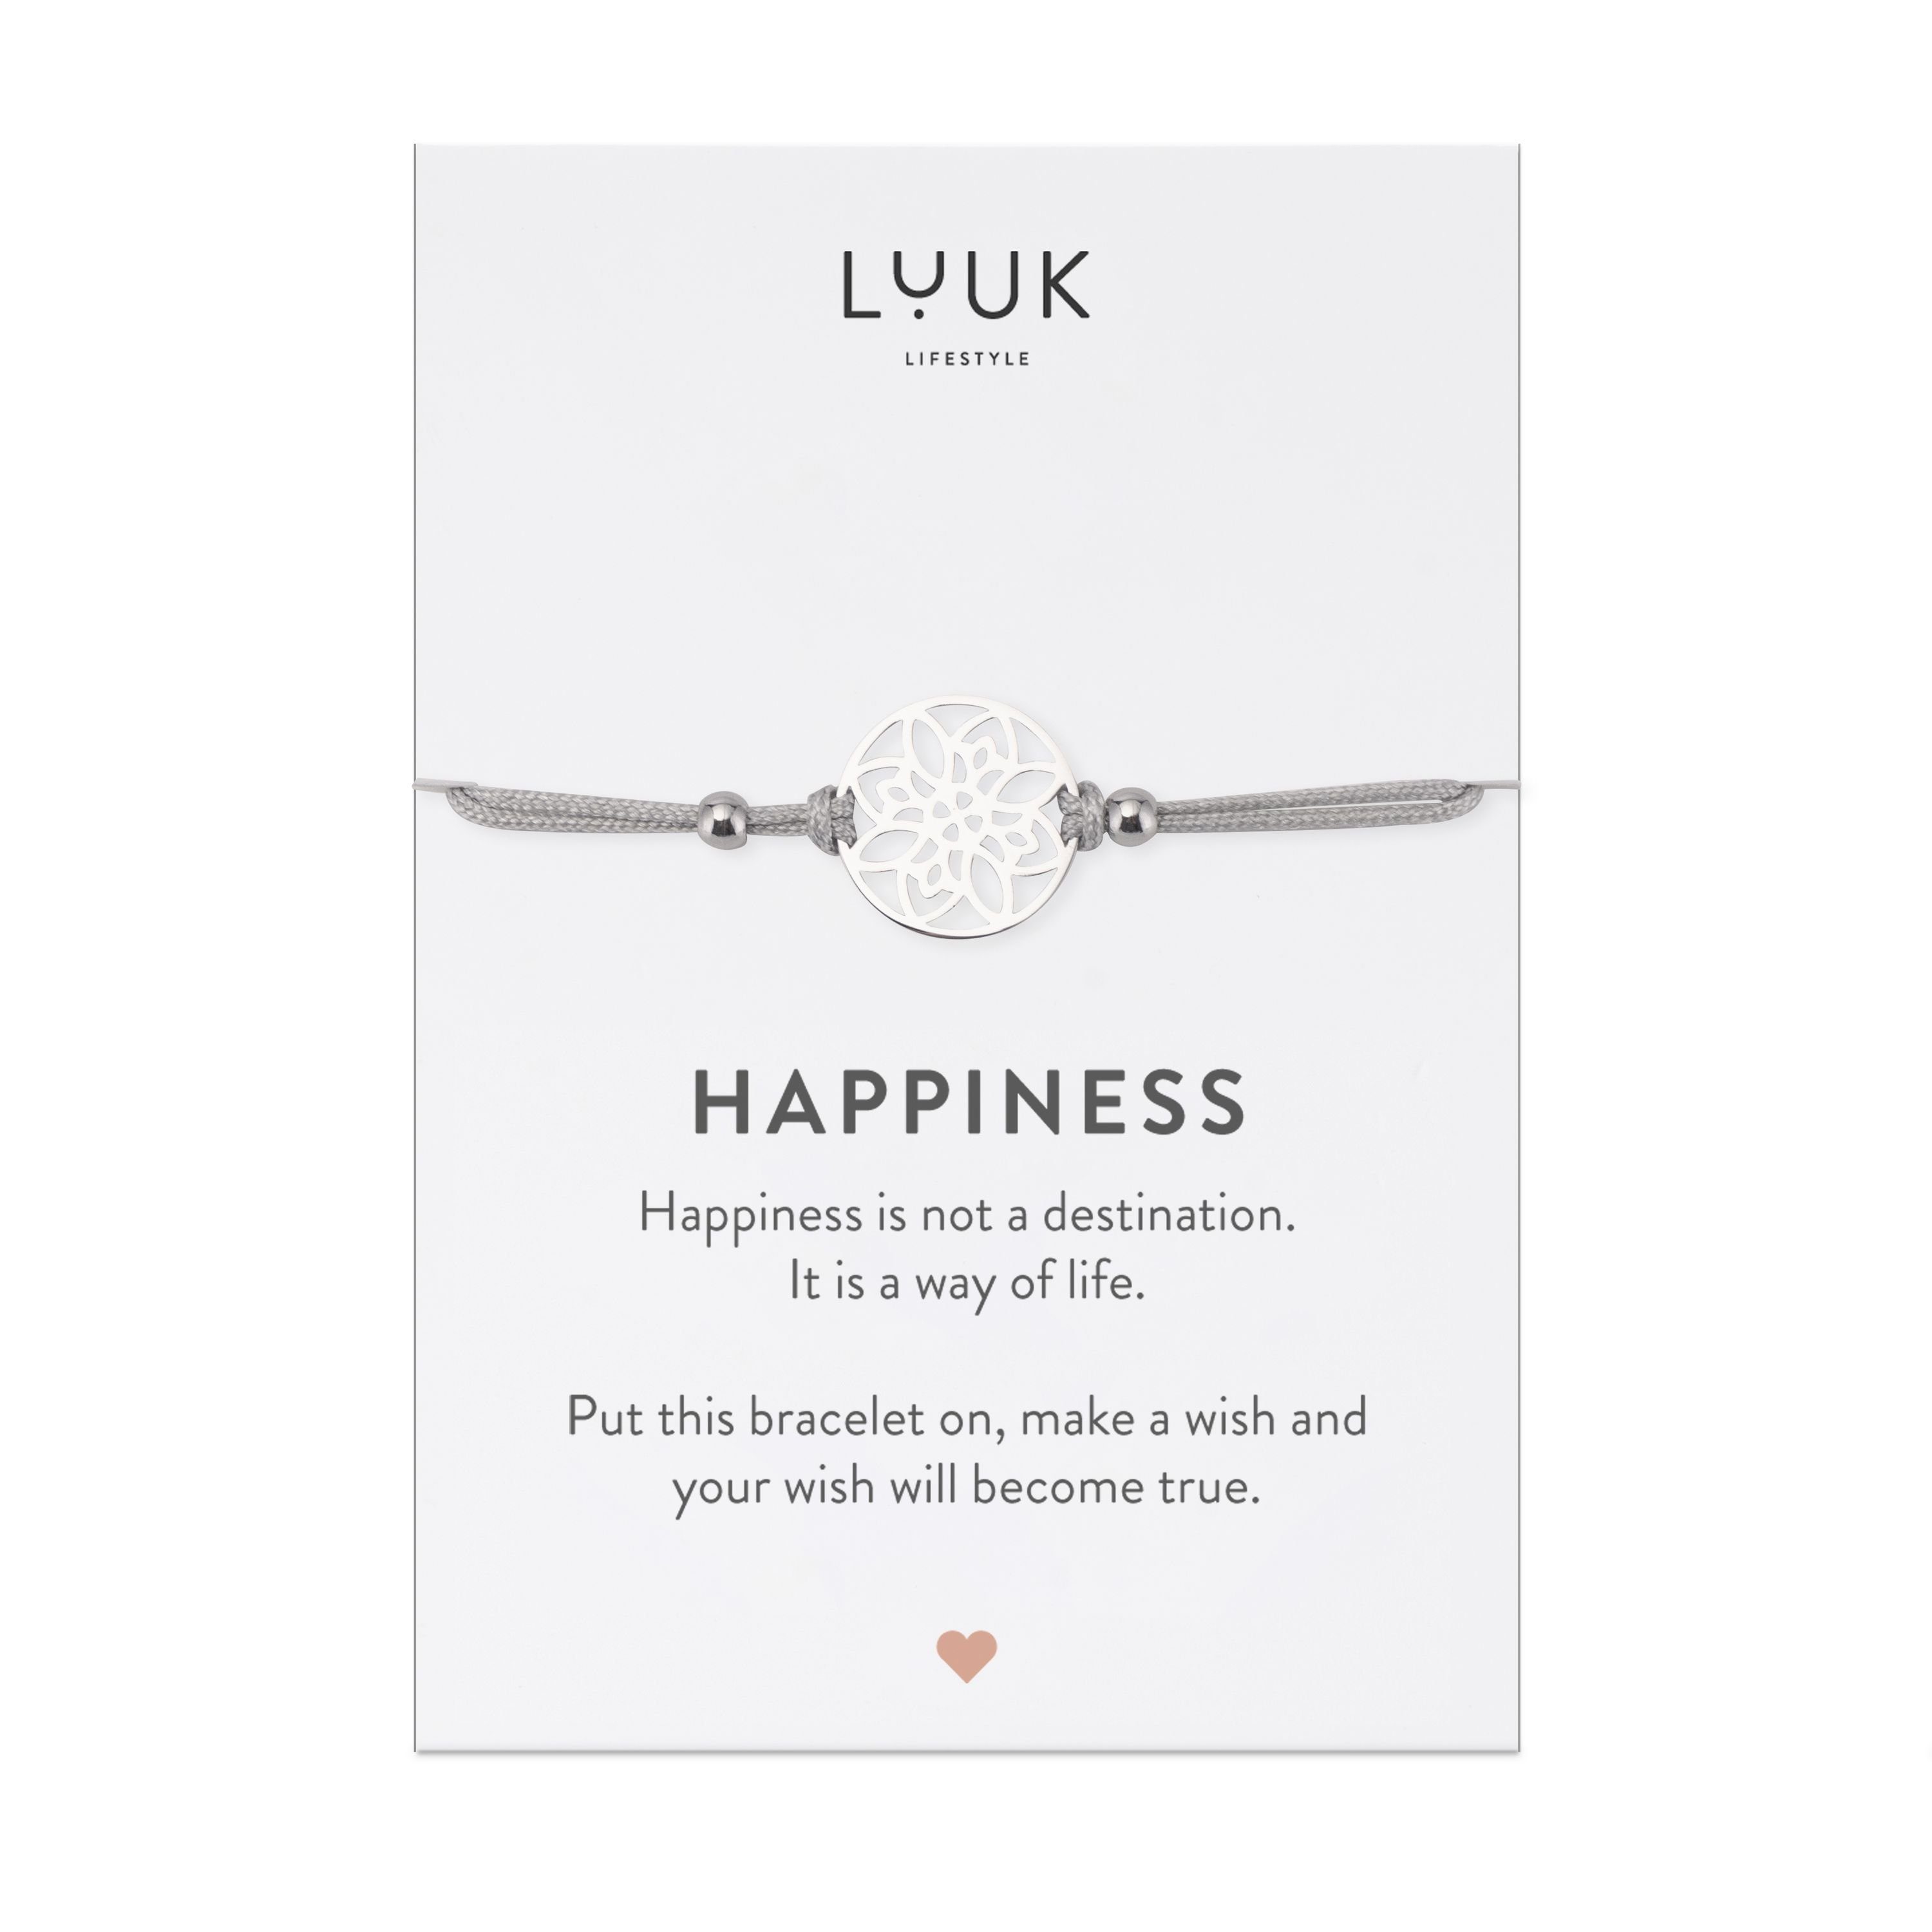 LUUK LIFESTYLE Freundschaftsarmband Blume, handmade, mit Happiness Spruchkarte Silber